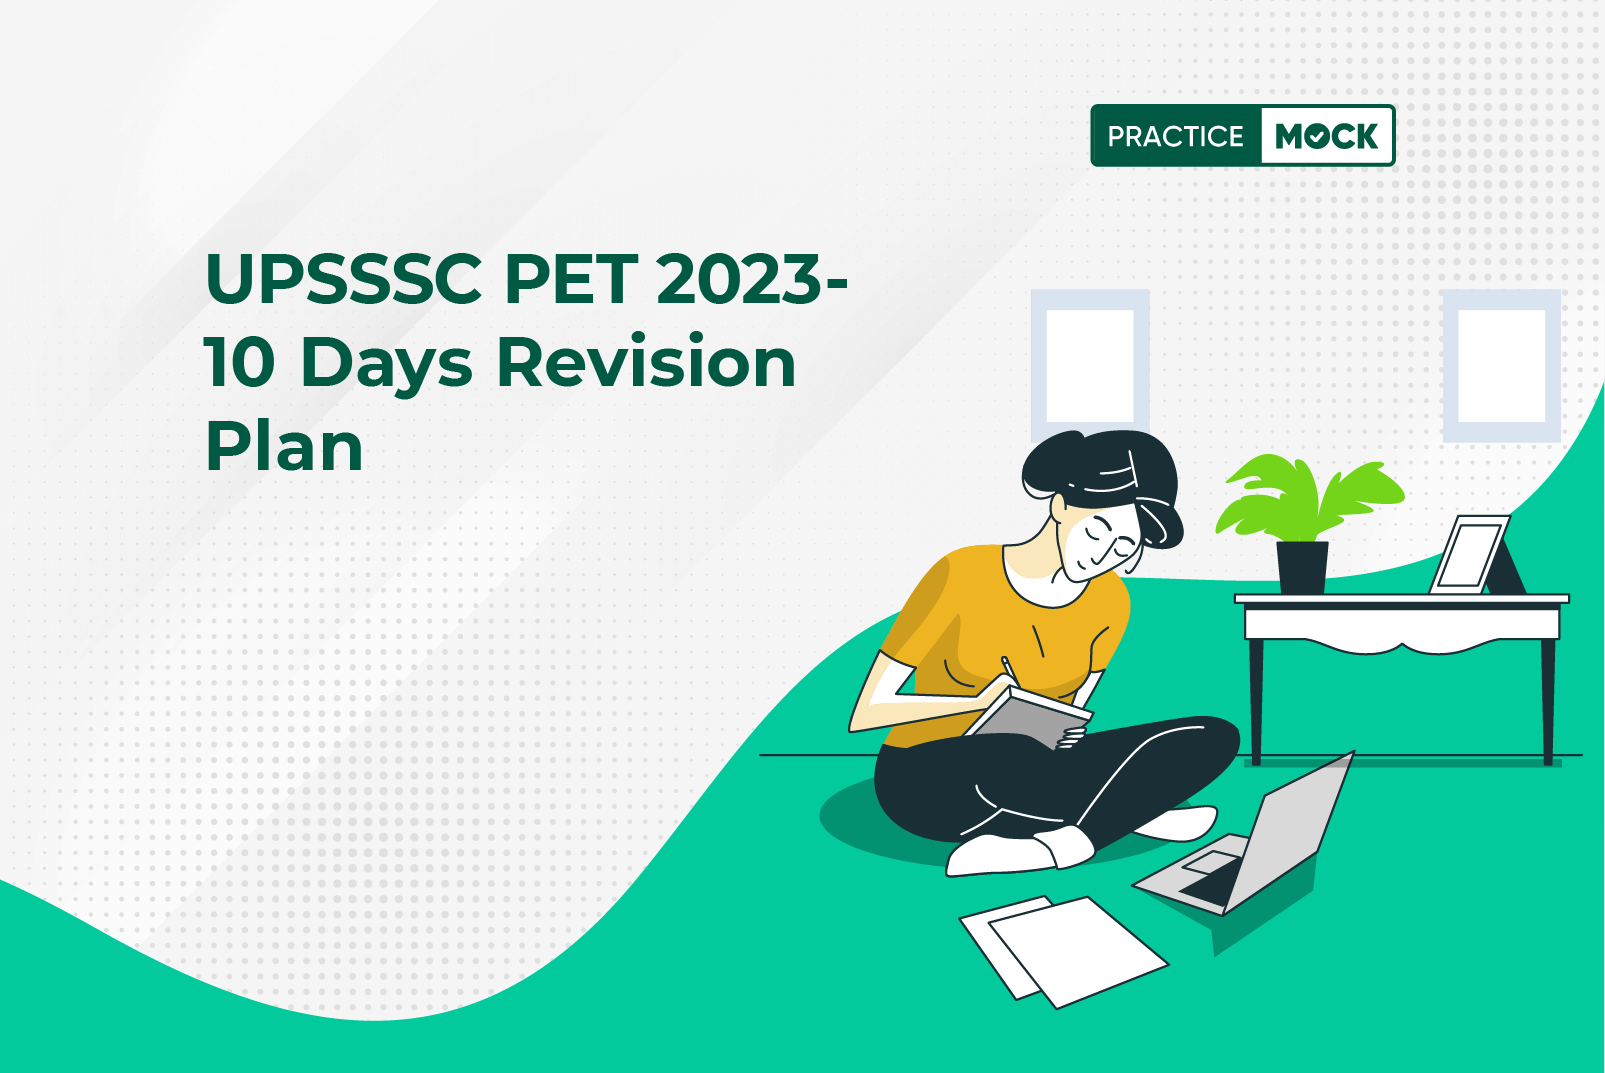 UPSSSC PET 2023- 10 Days Revision Plan